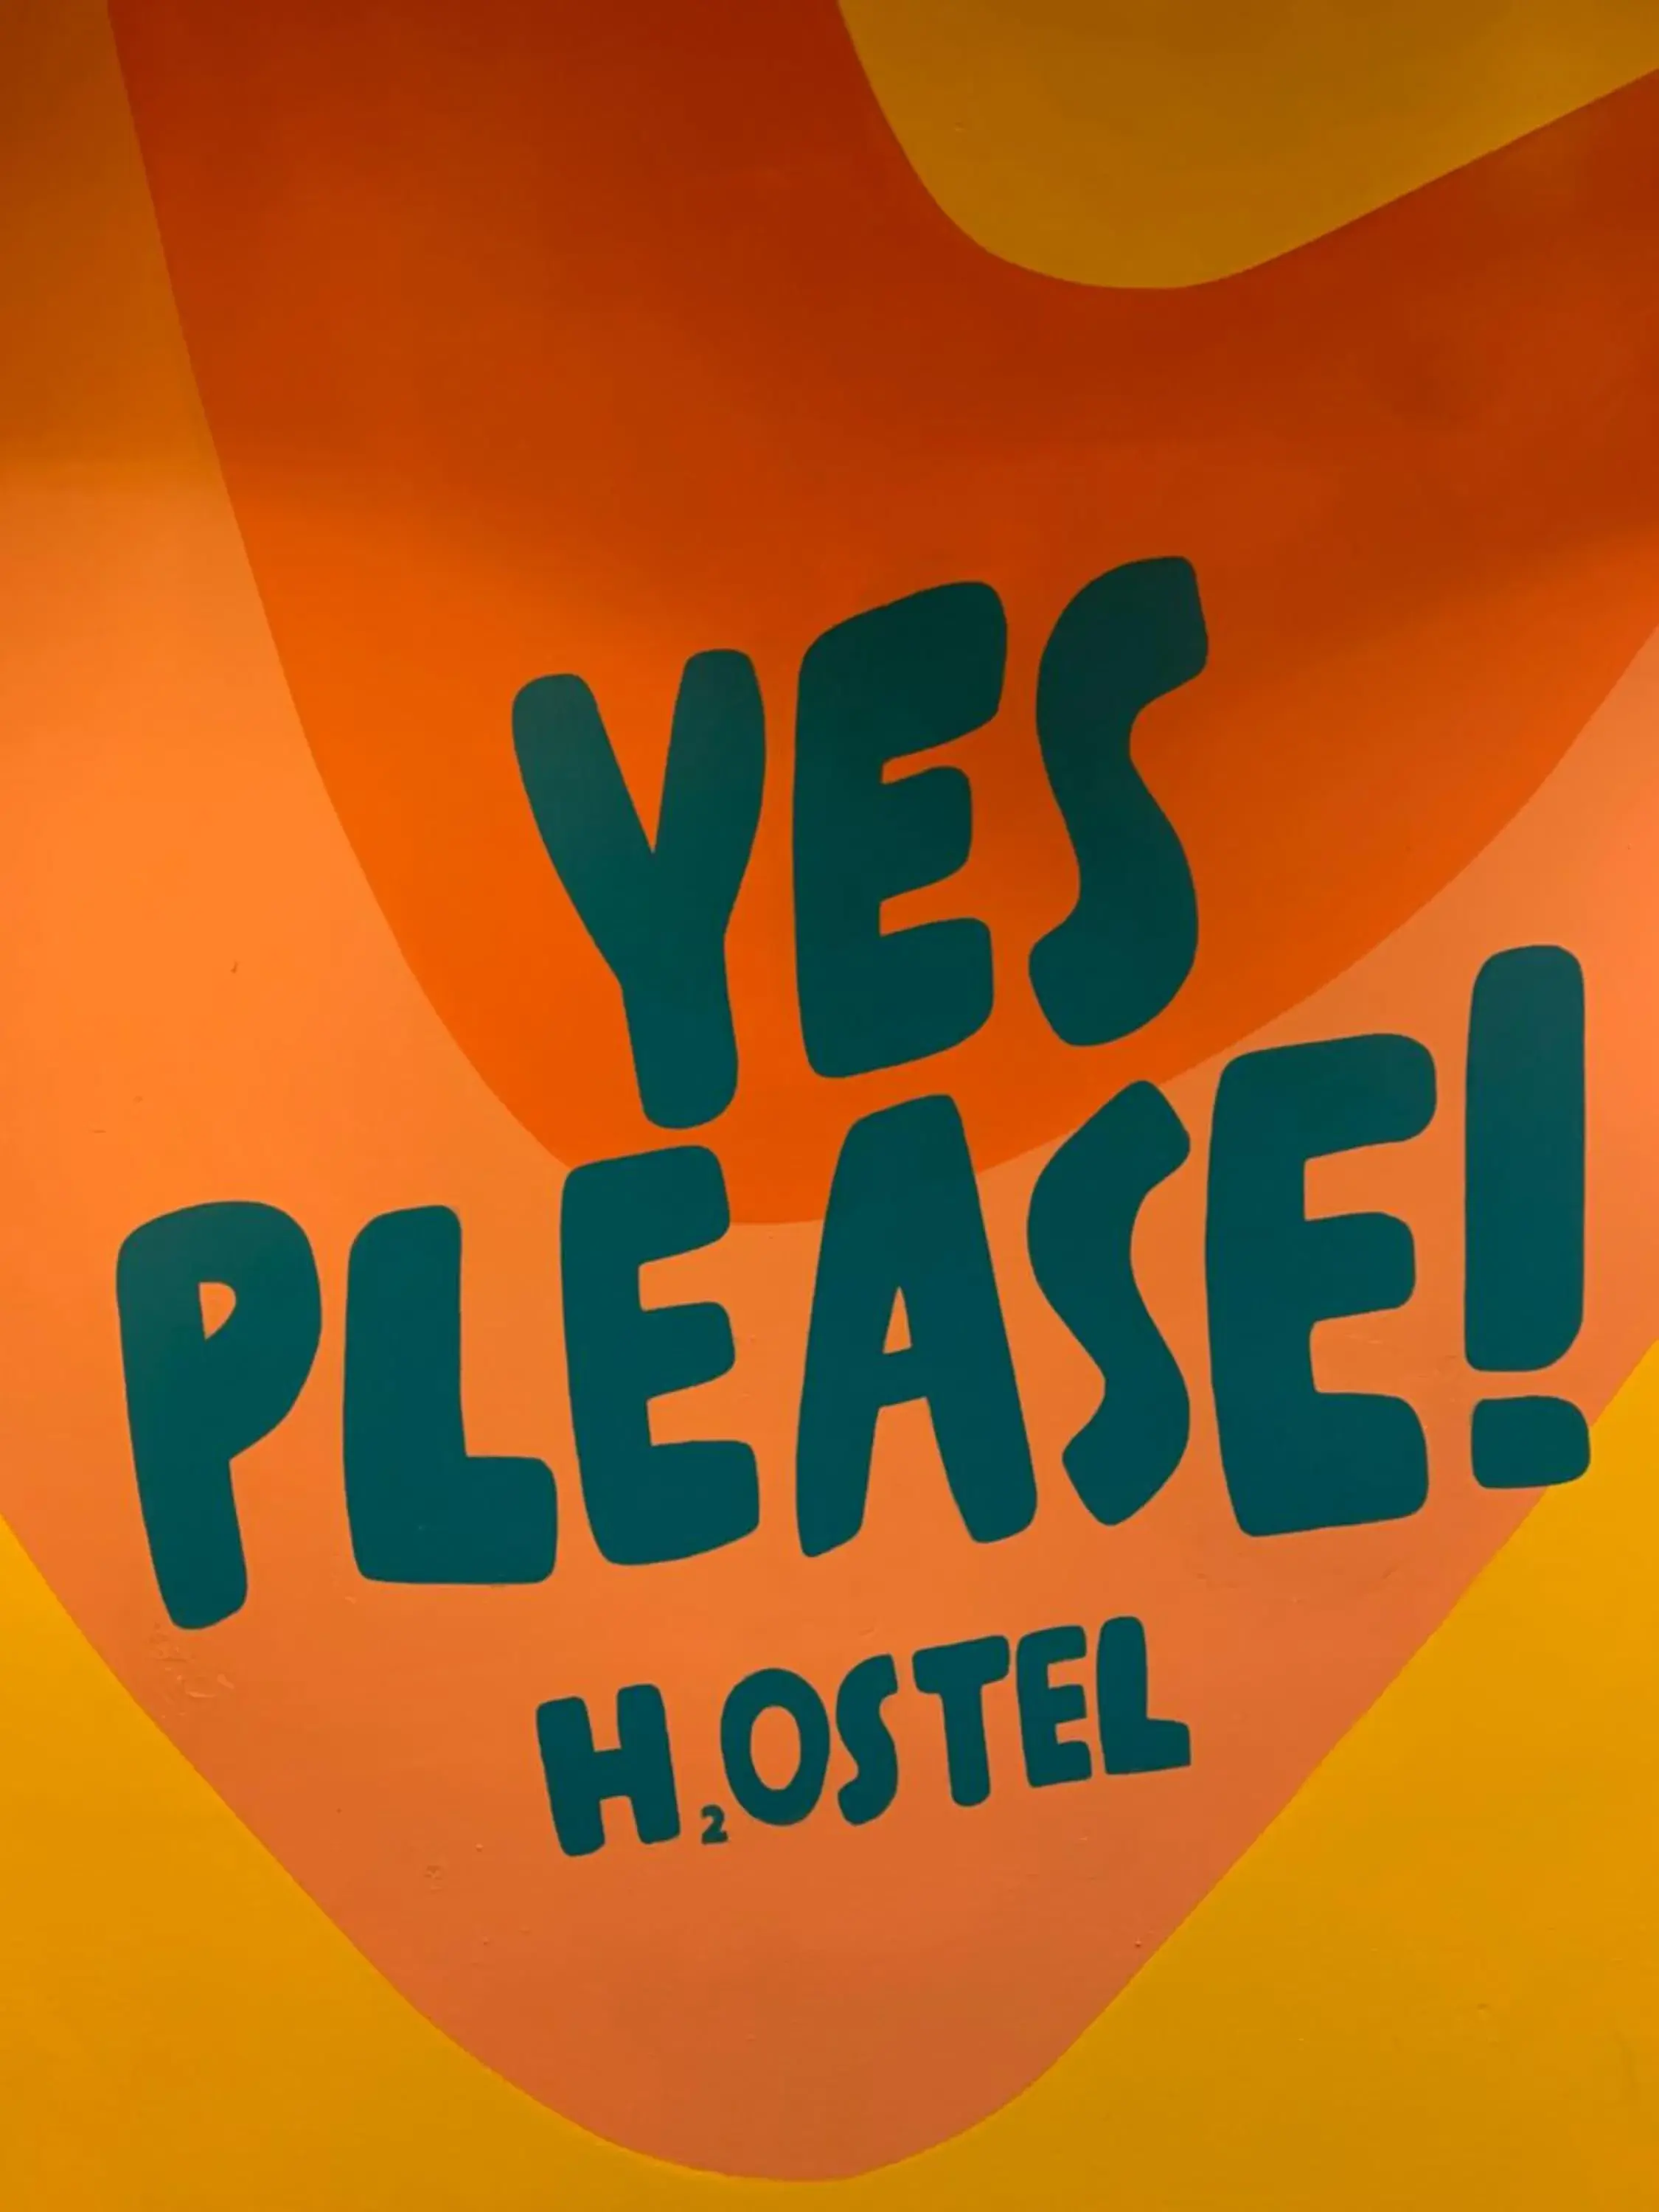 Logo/Certificate/Sign in Yes Please! Hostel